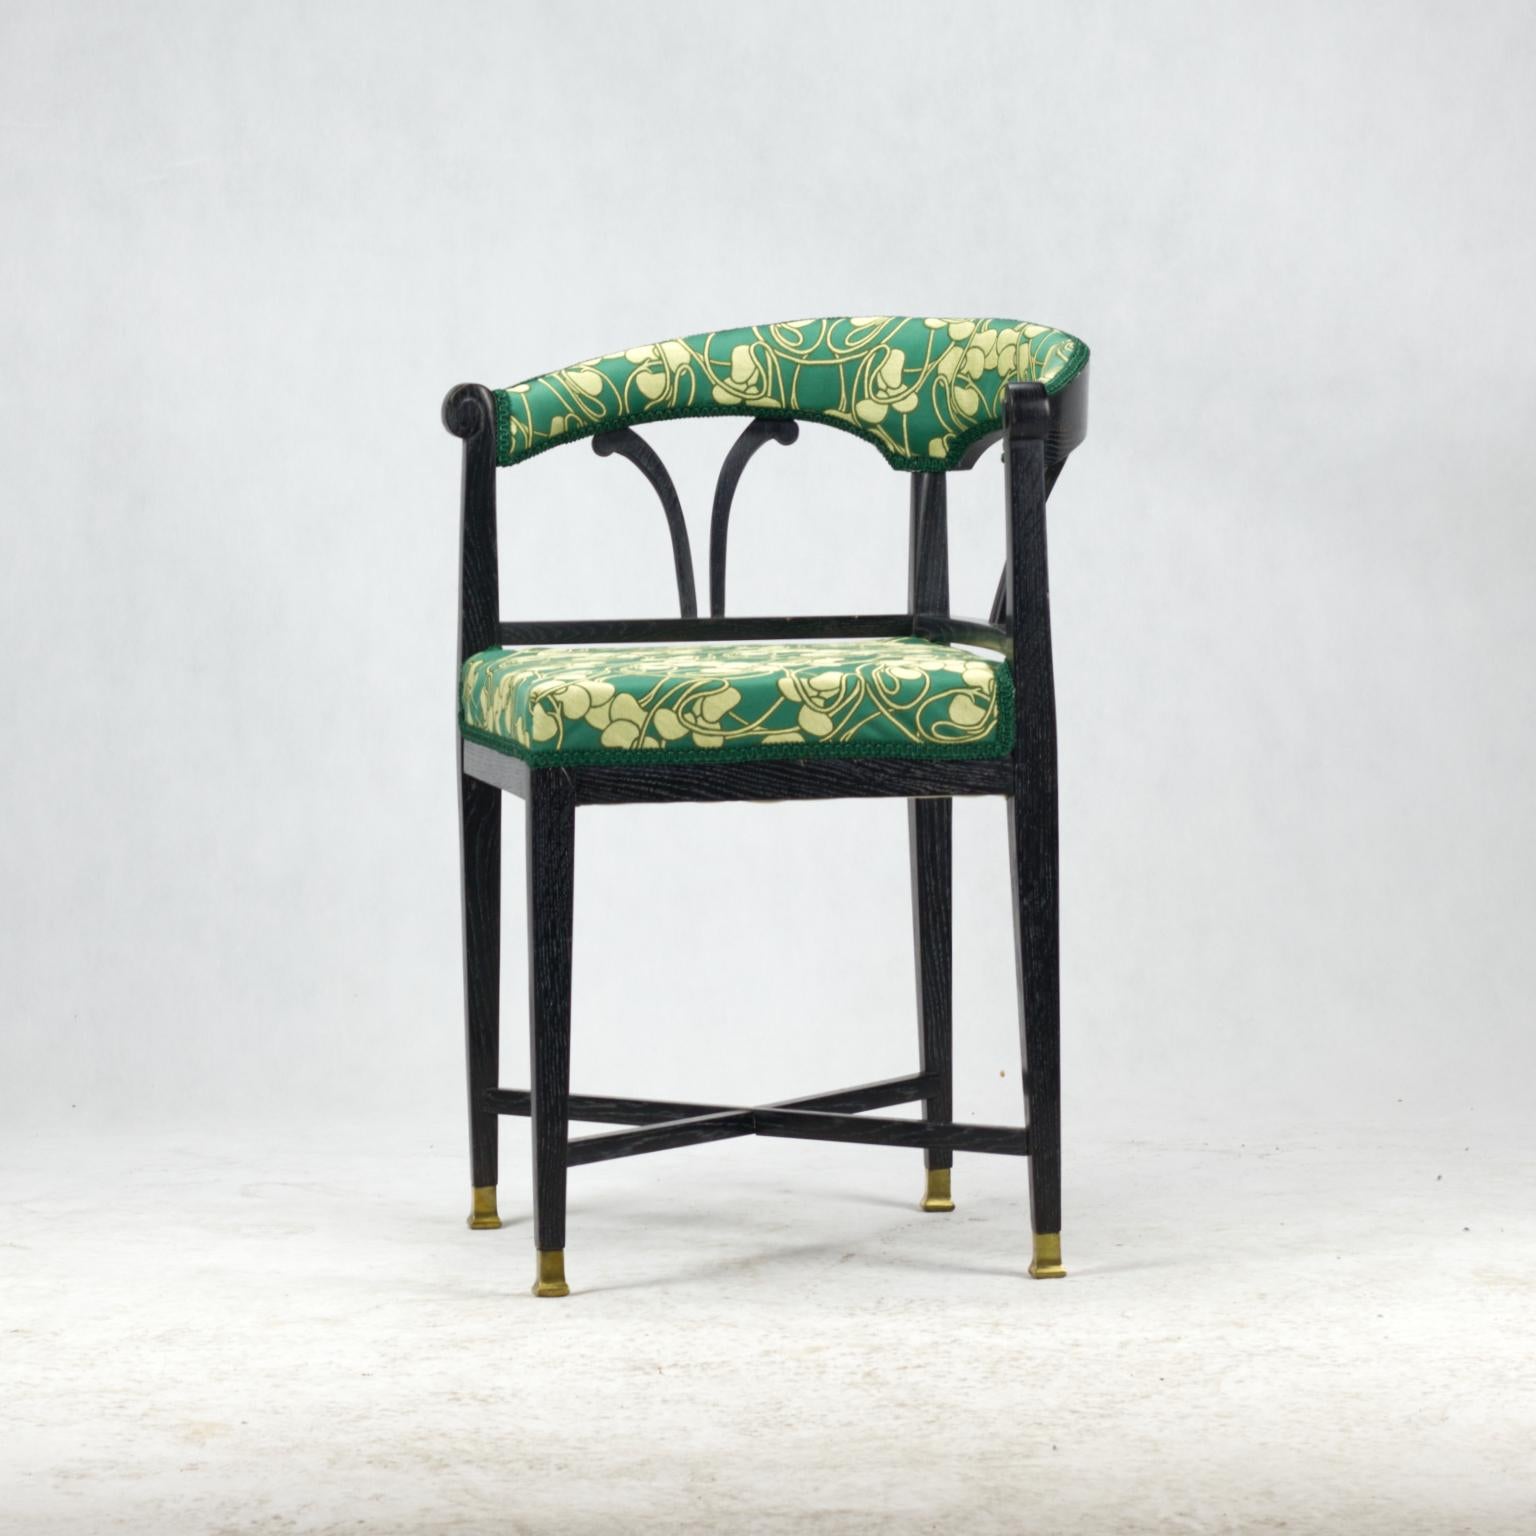 Art Nouveau ebonized wood corner chair in new upholstery.